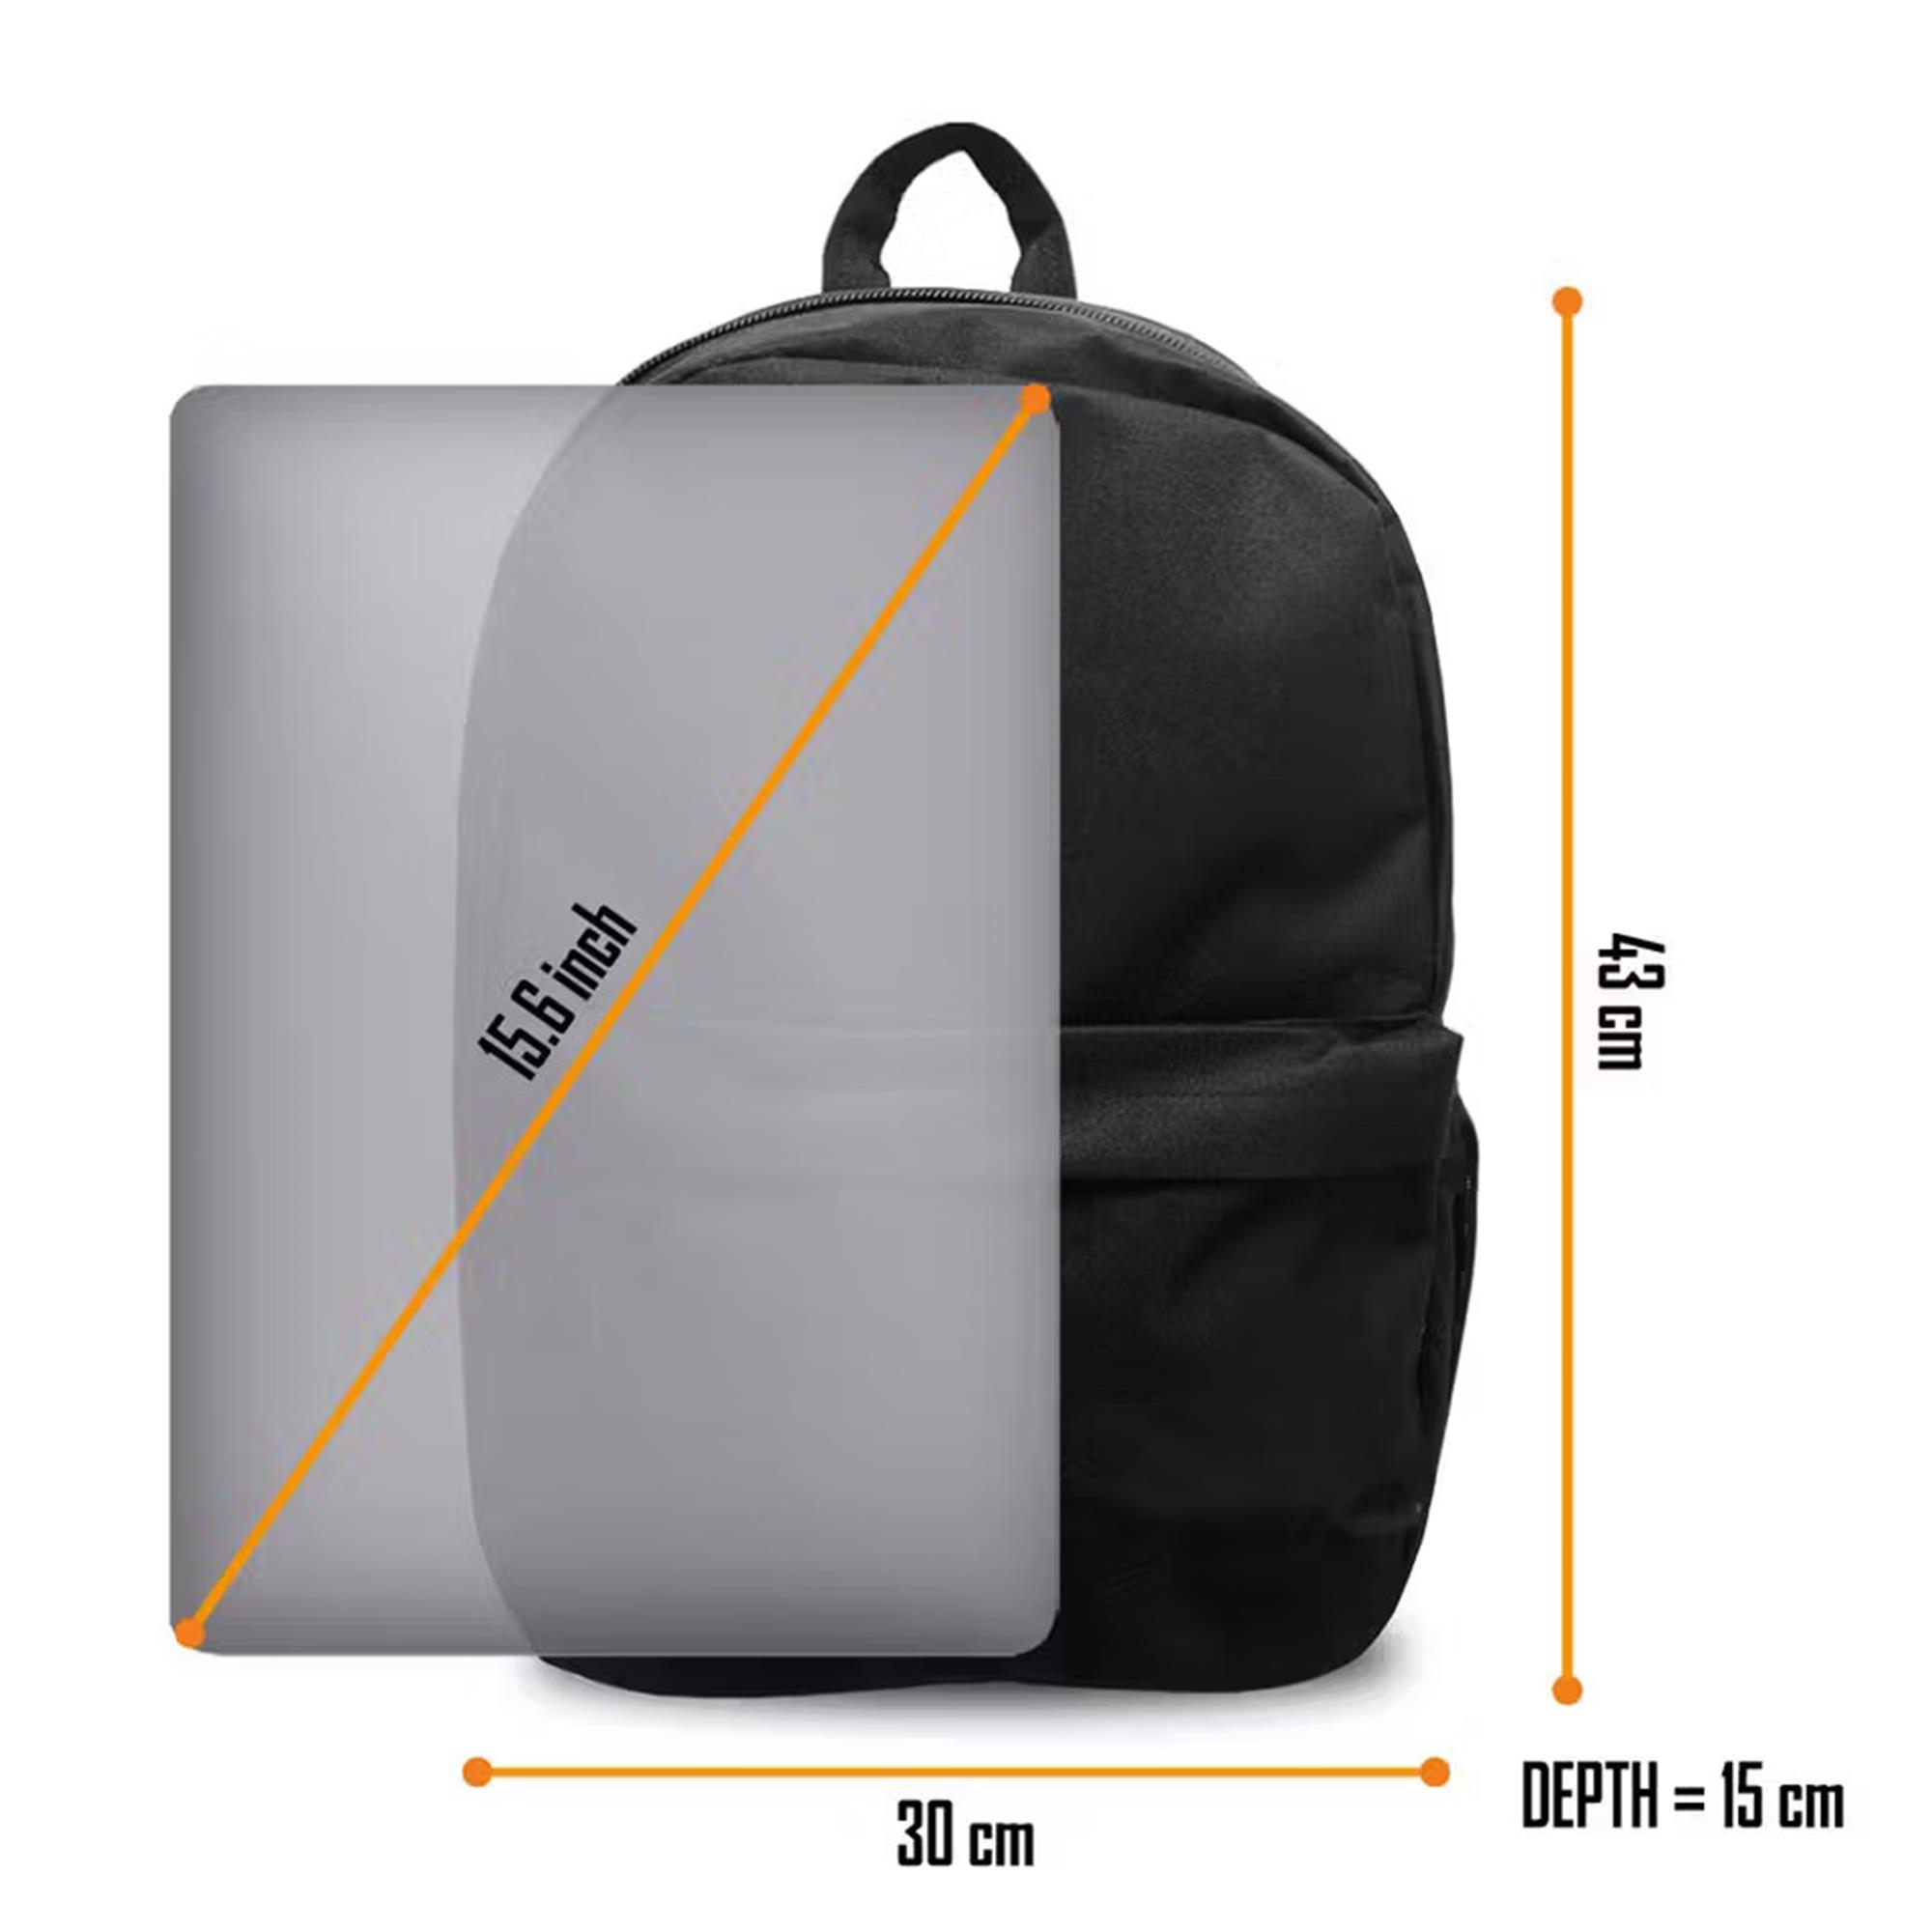 Gravity Backpack